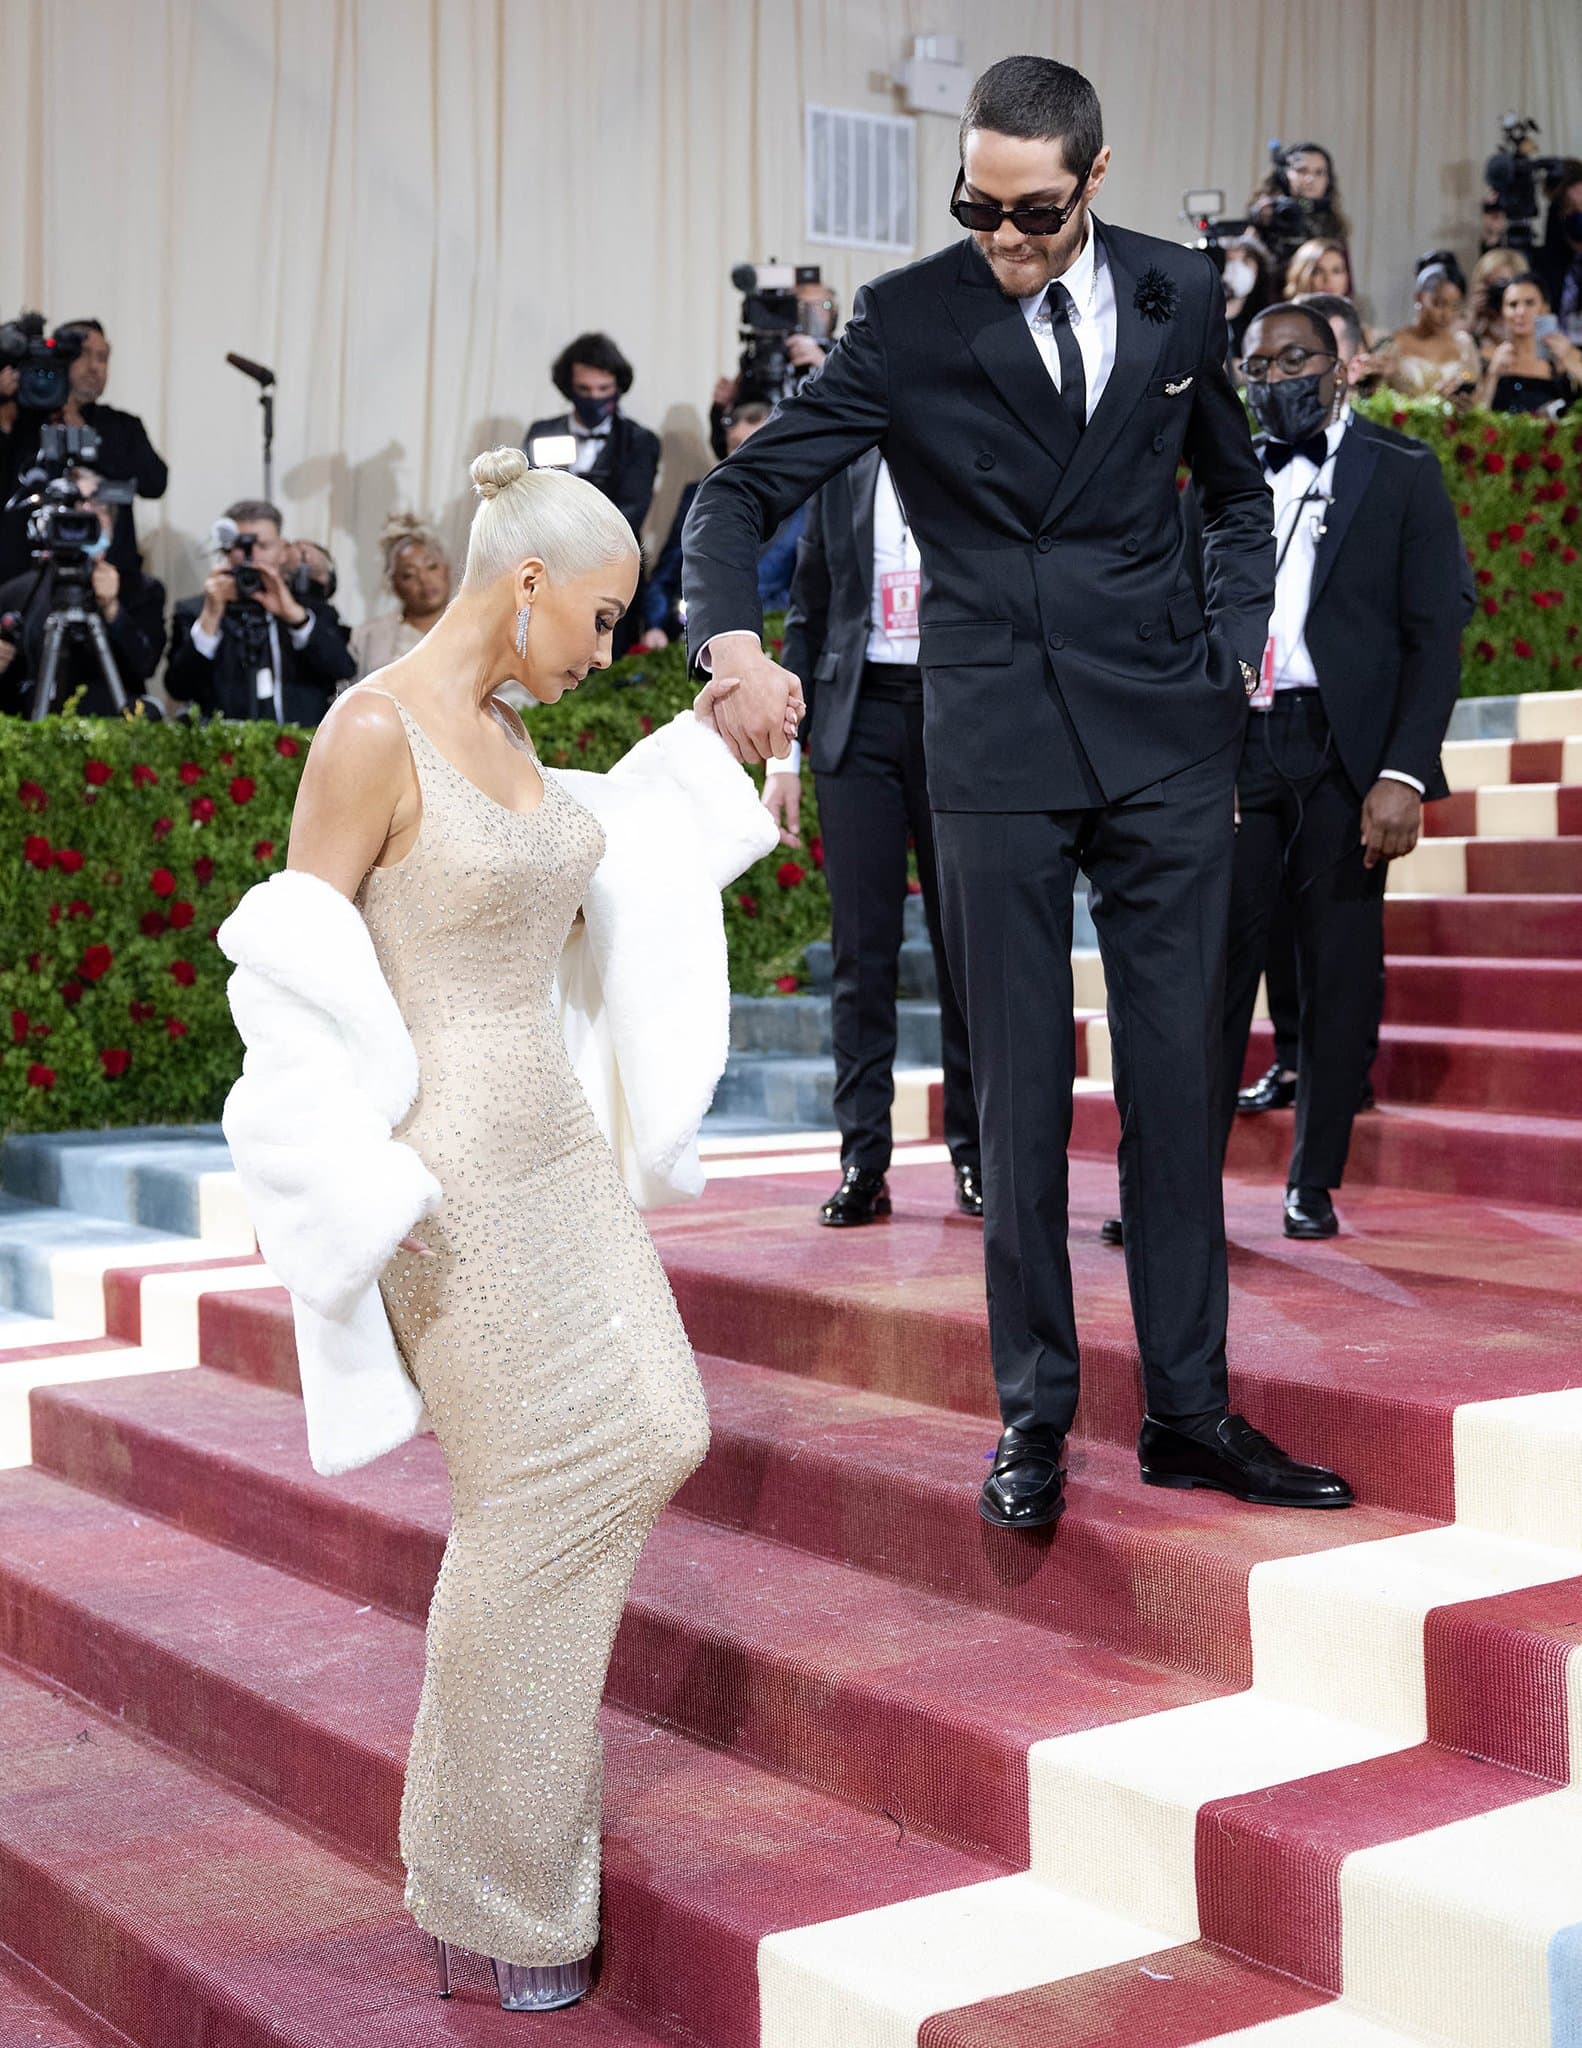 Pete Davidson helps Kim Kardashian as she takes tiny steps on the Grand Staircase at the Metropolitan Museum of Art